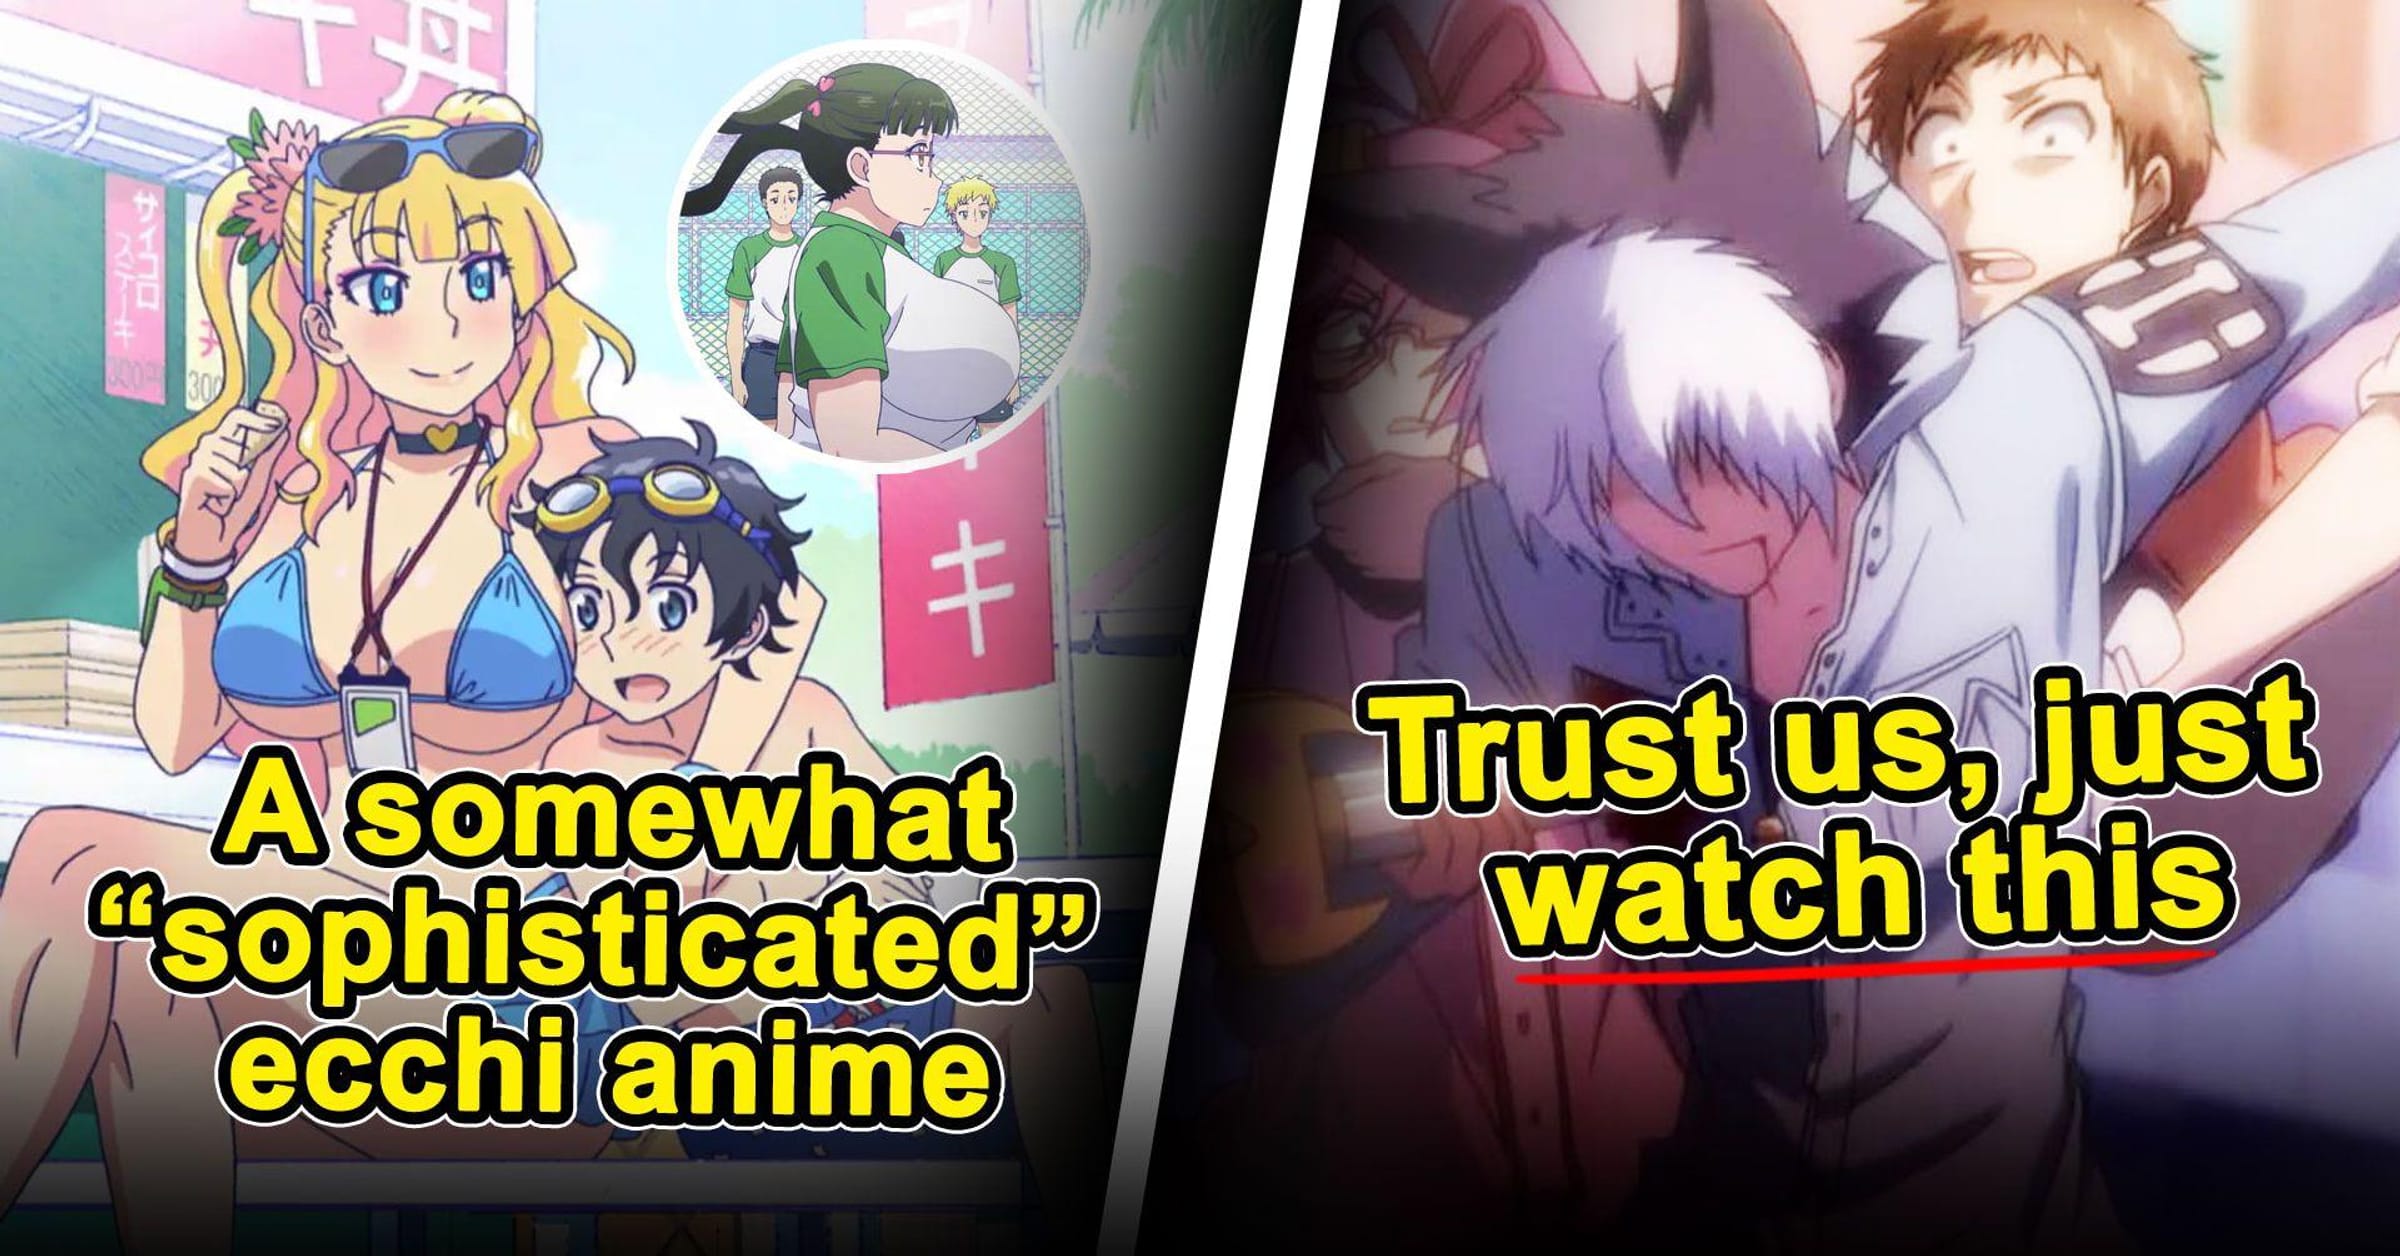 Anime Genres Explained by Anime Memes - Sentai Filmworks